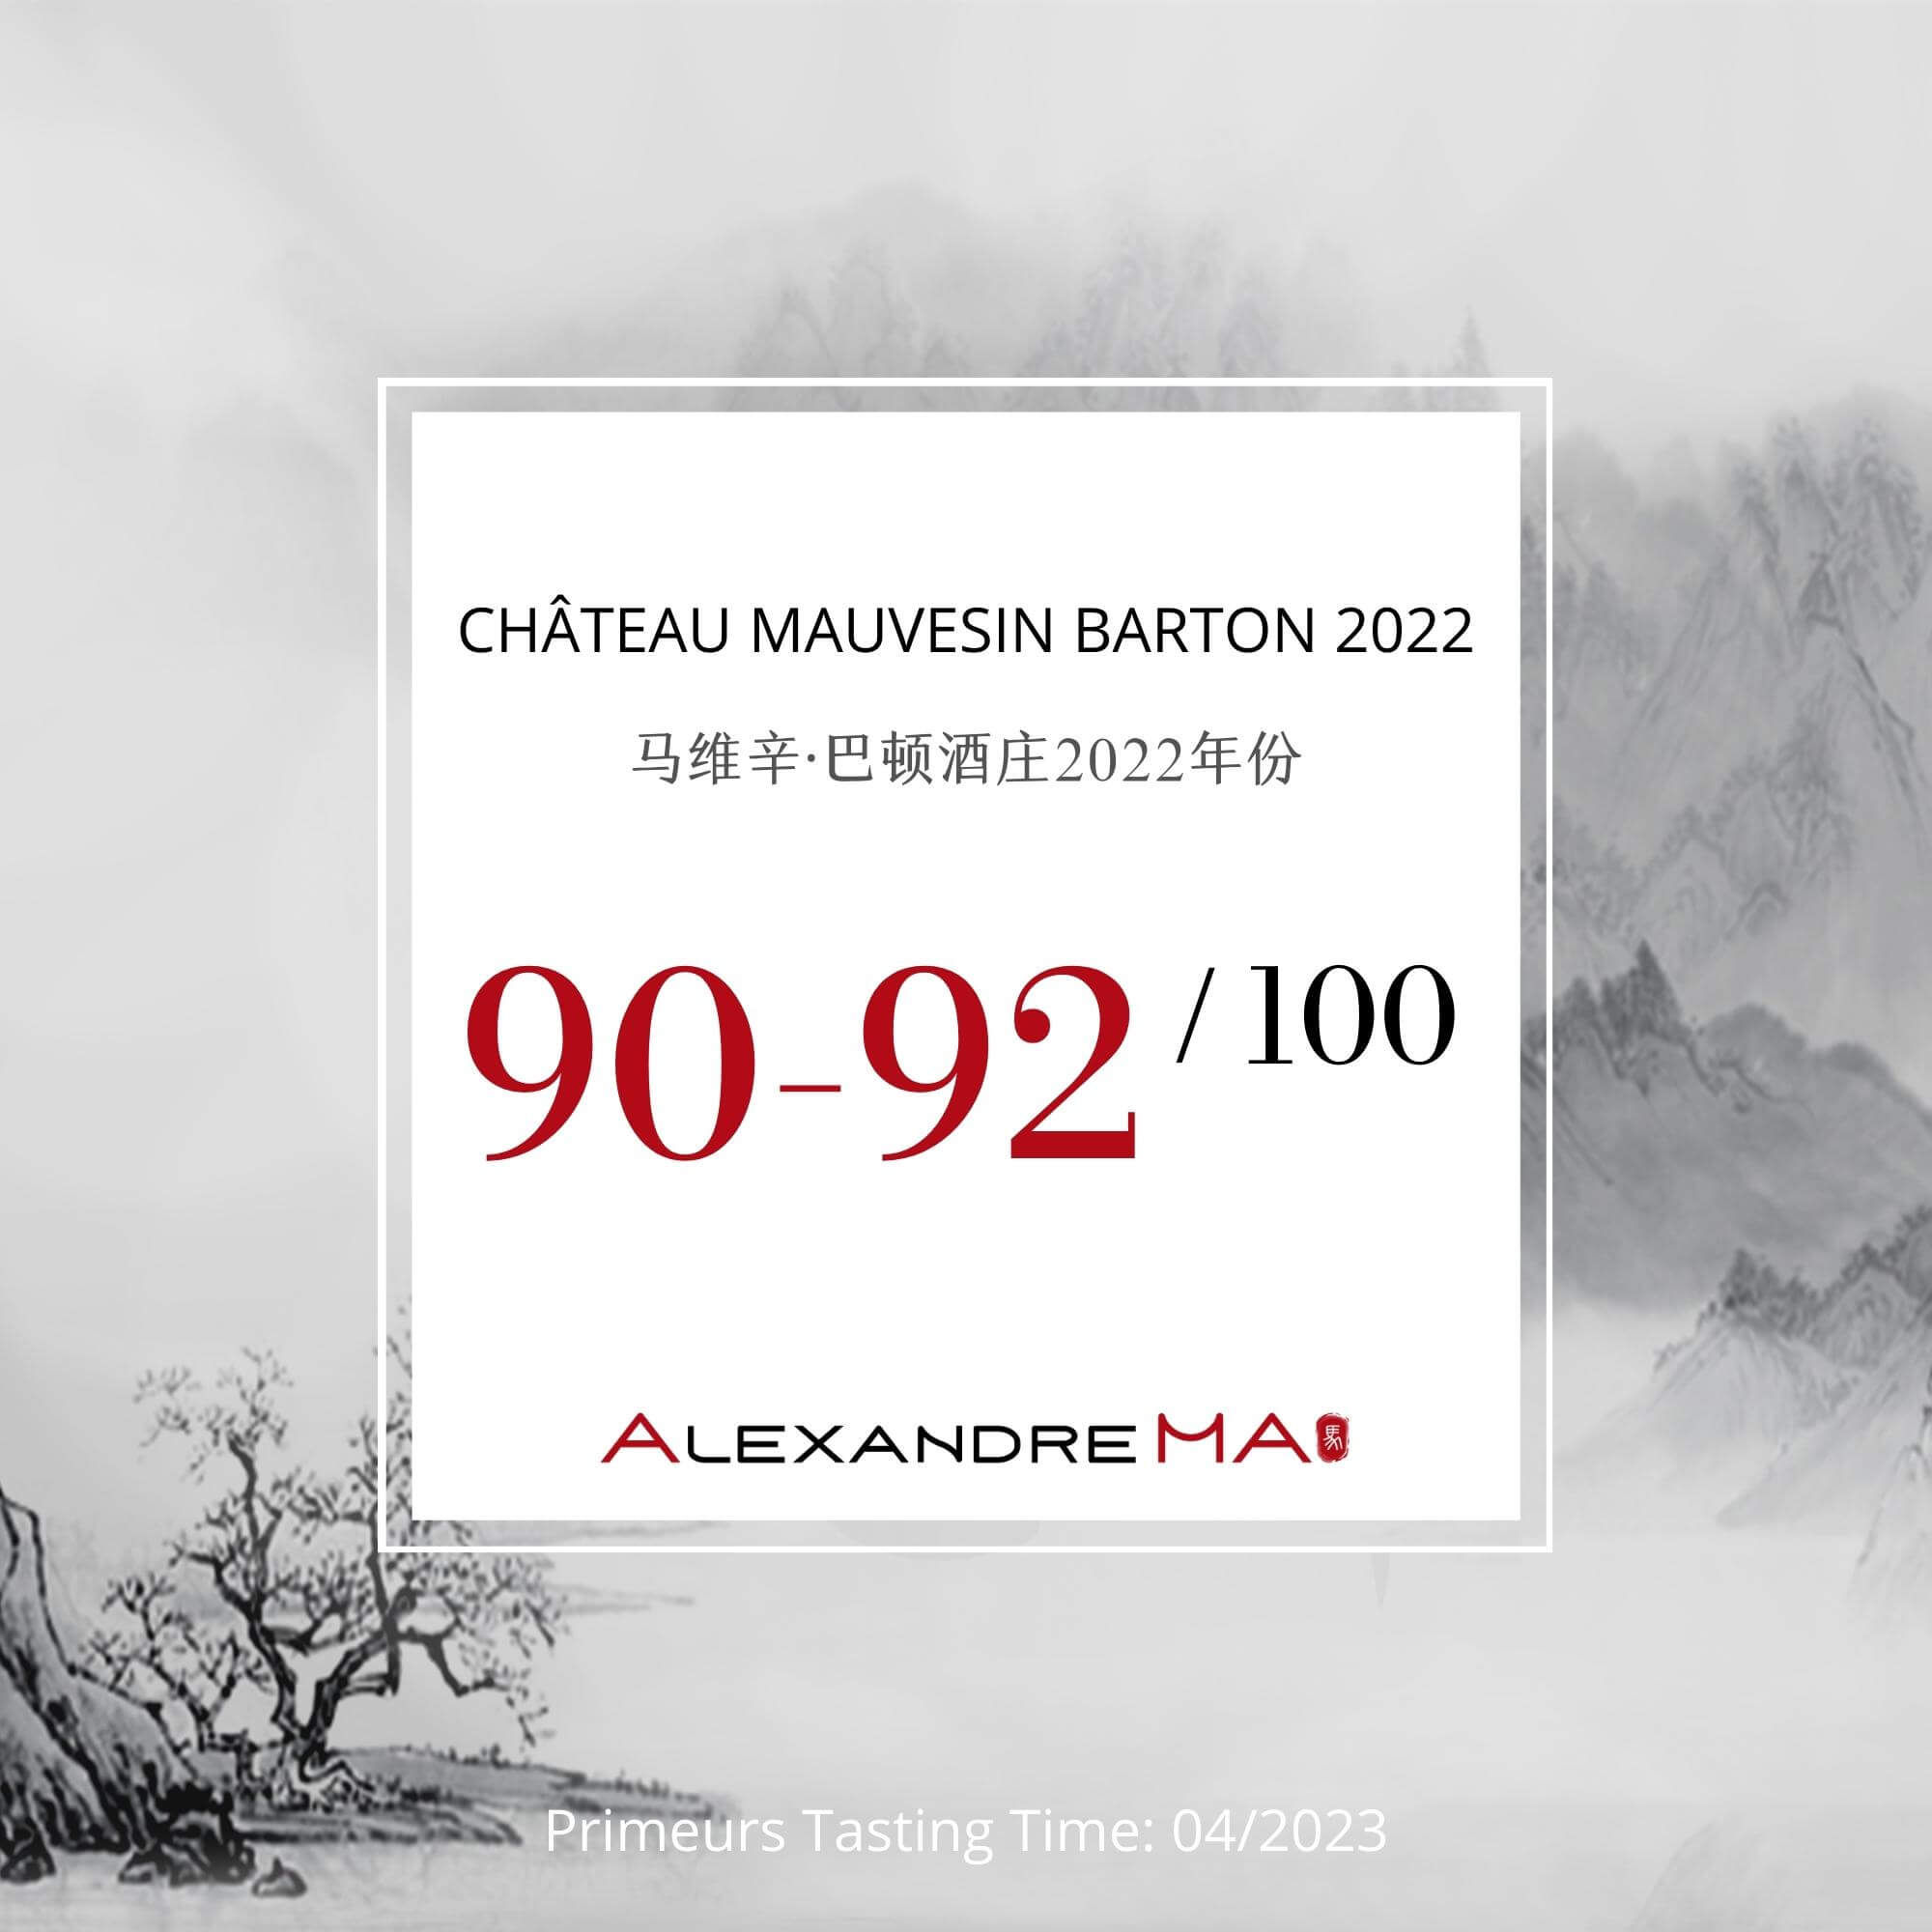 Château Mauvesin Barton 2022 Primeurs - Alexandre MA